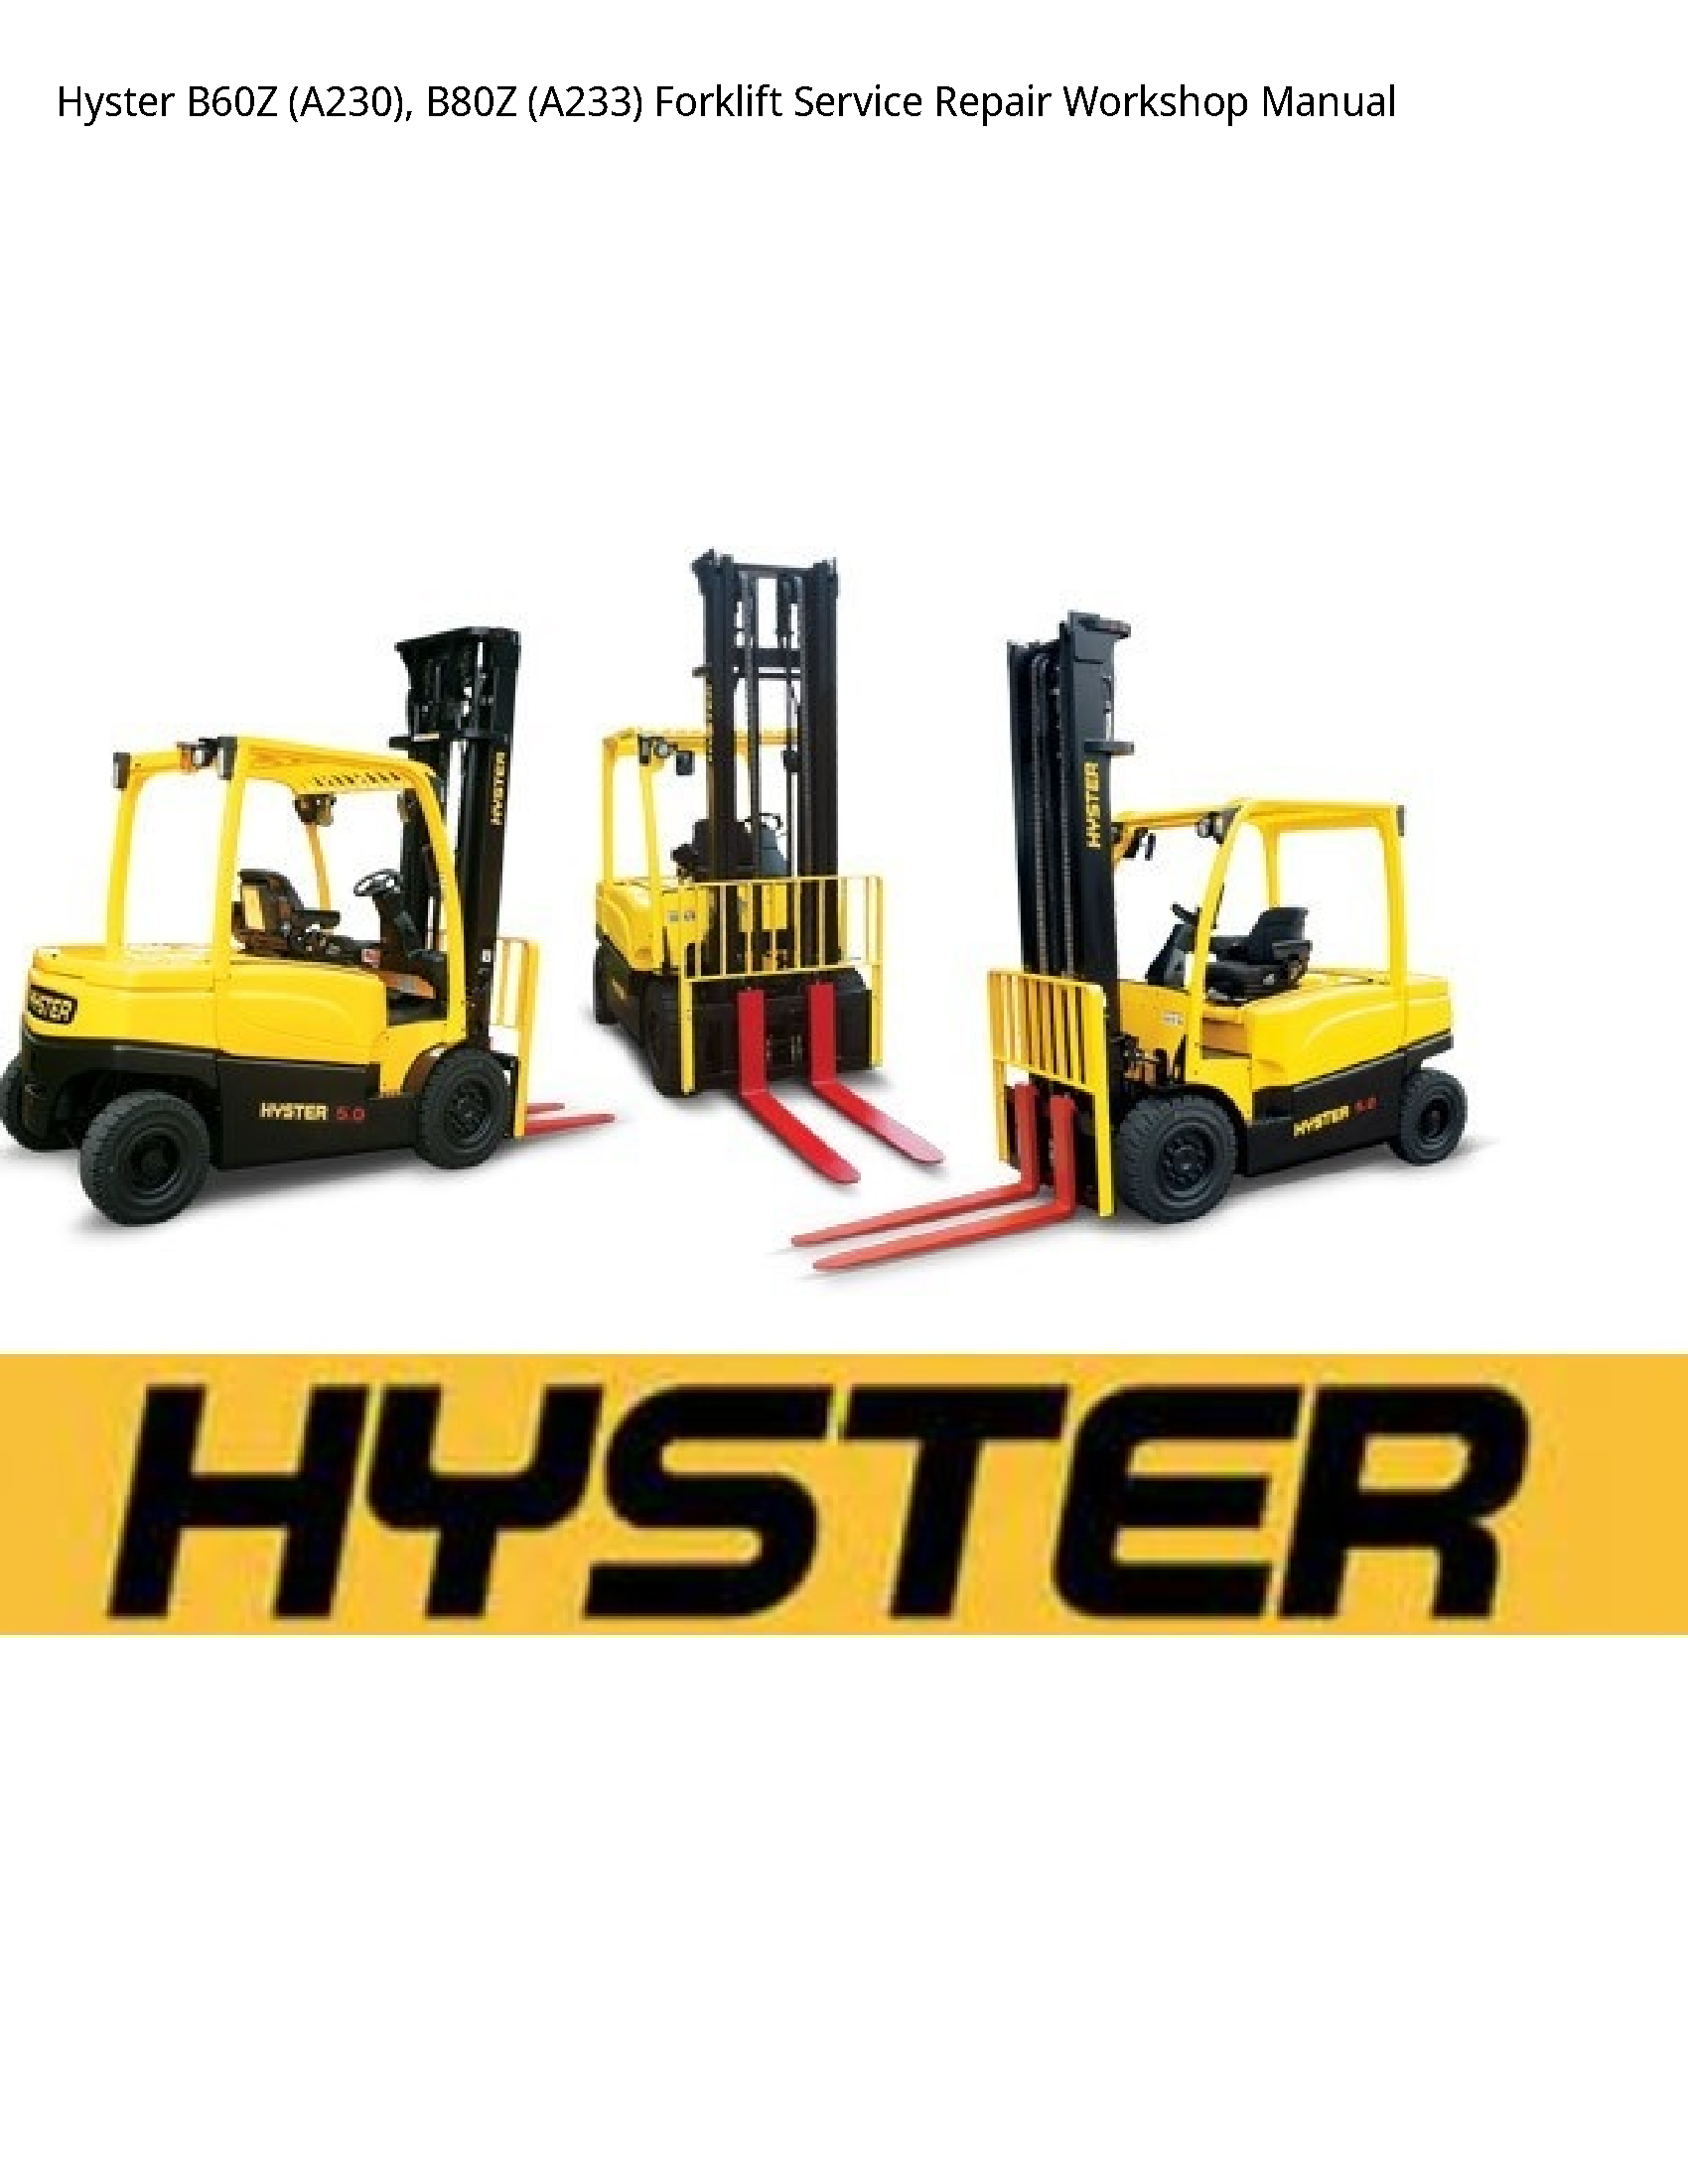 Hyster B60Z Forklift manual